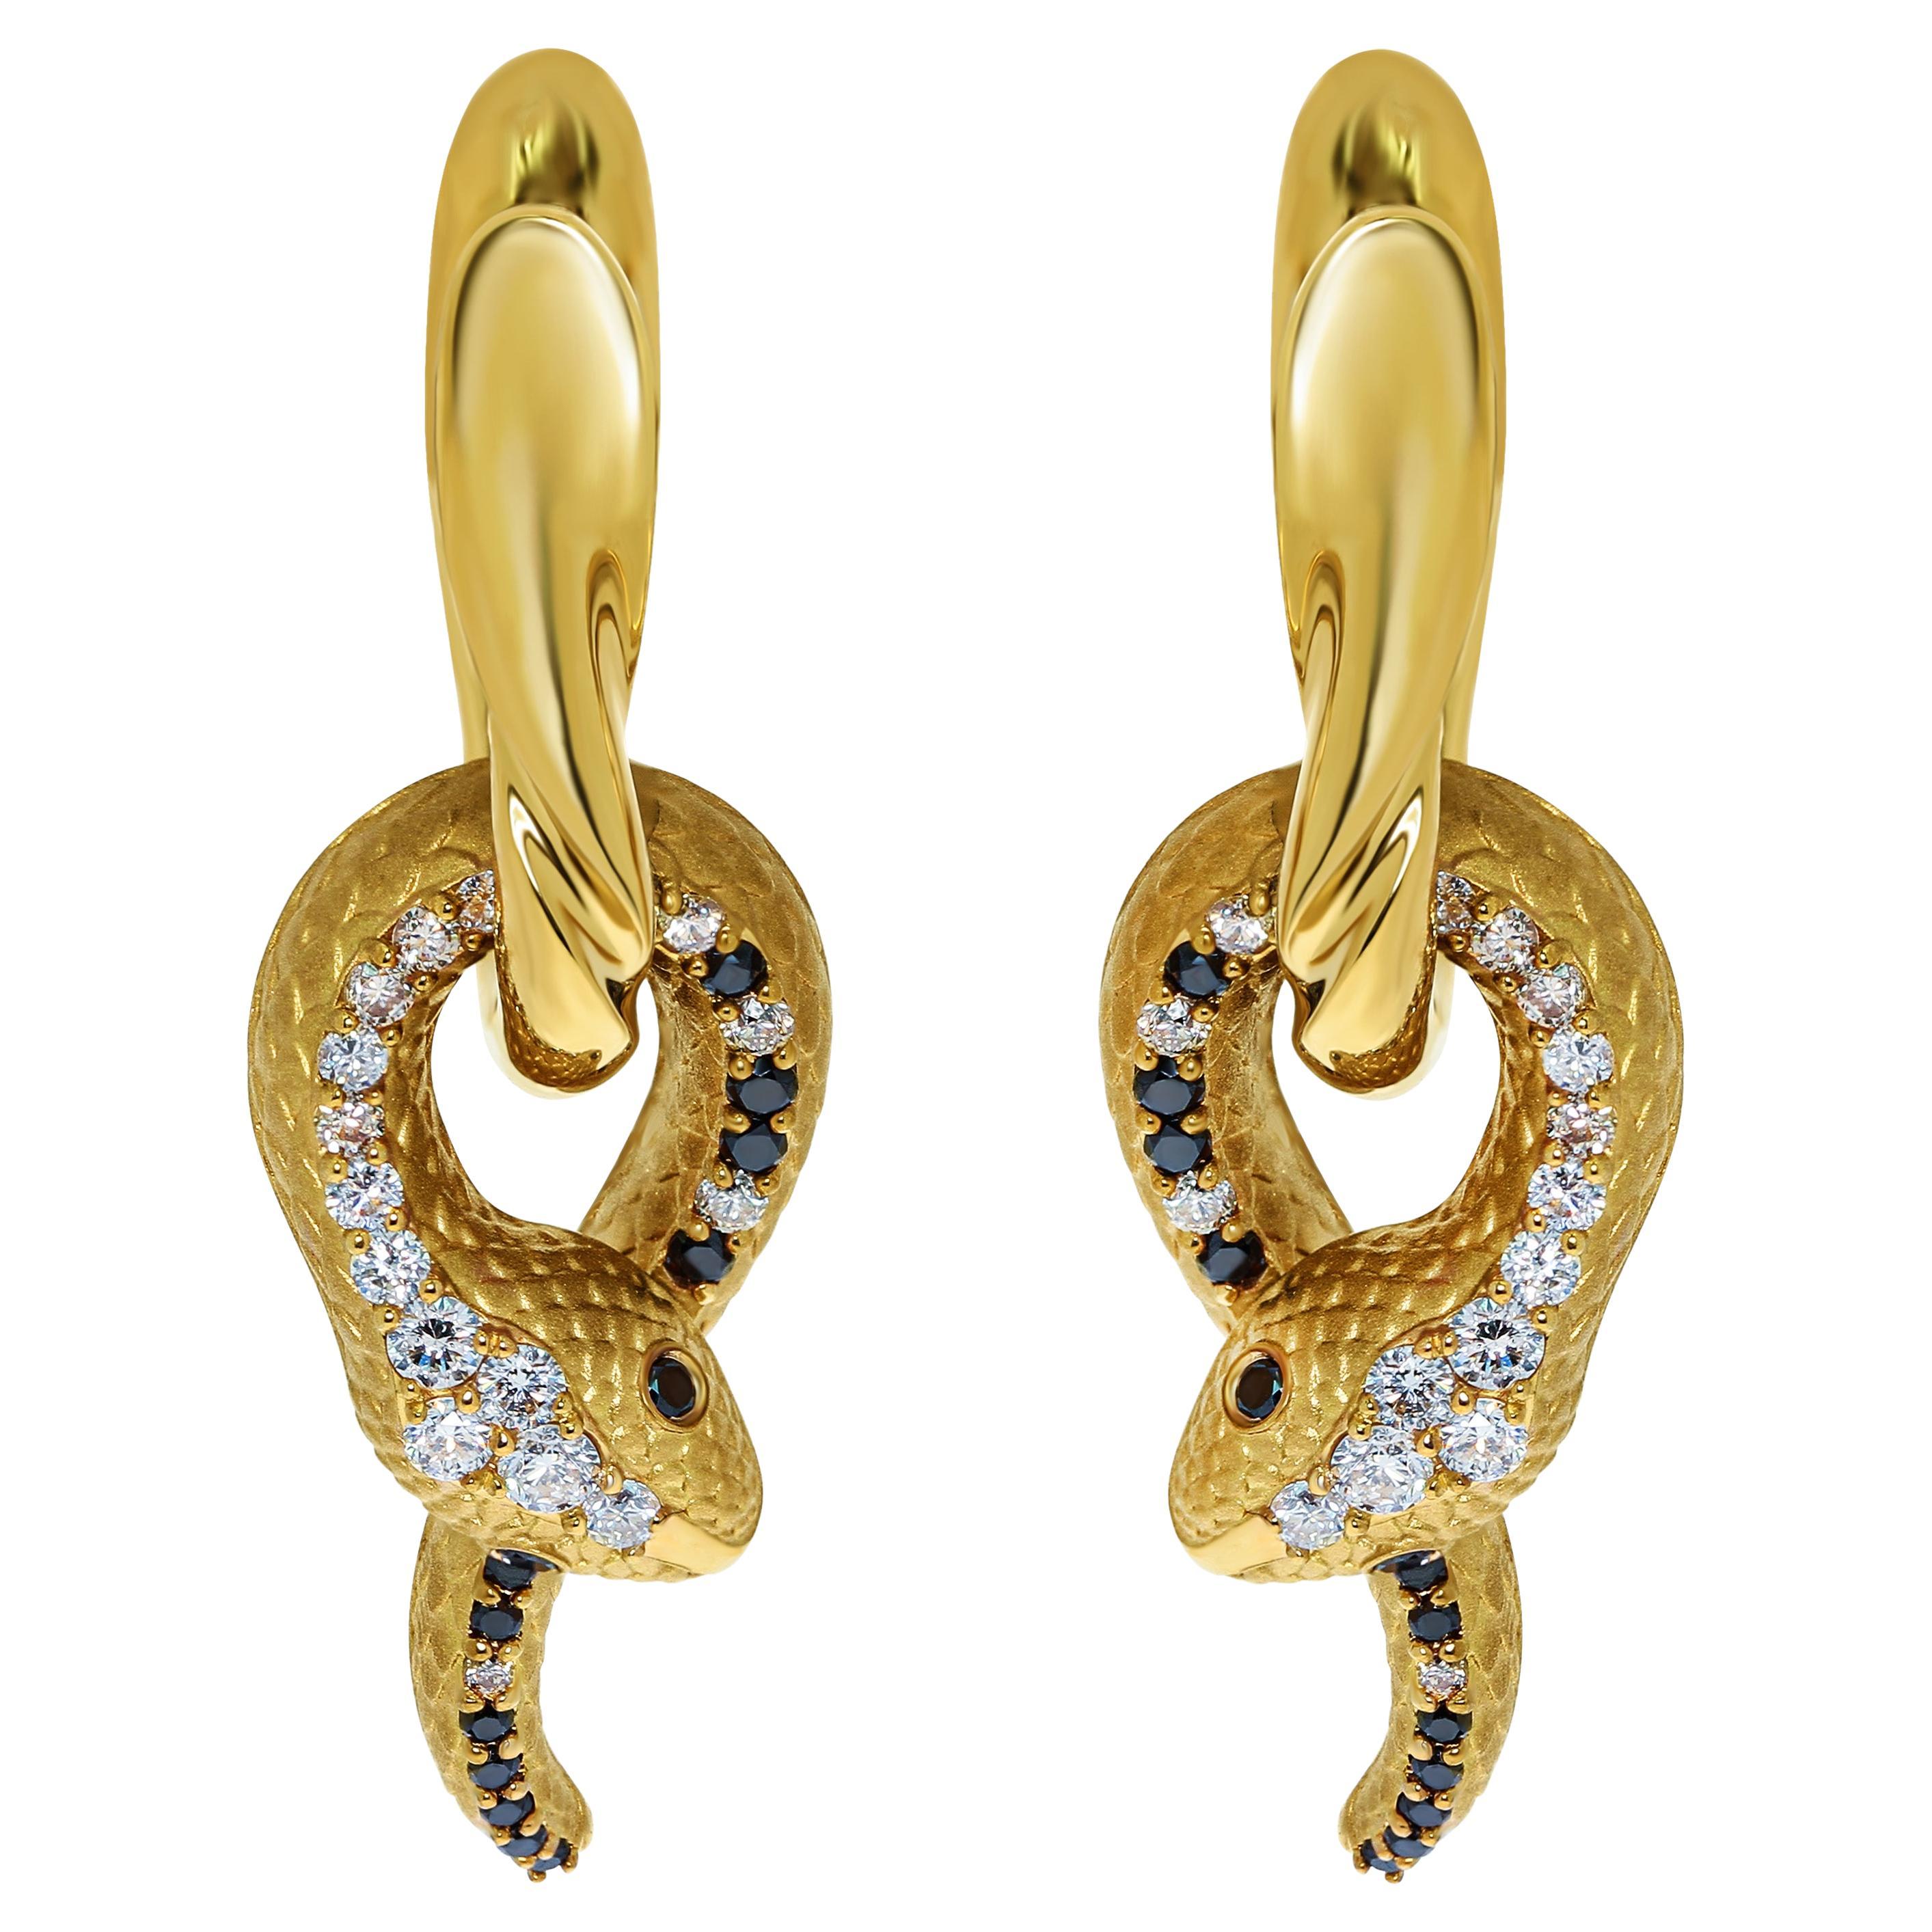 White, Champagne and Black Diamonds 18 Karat Yellow Gold Snake Earrings